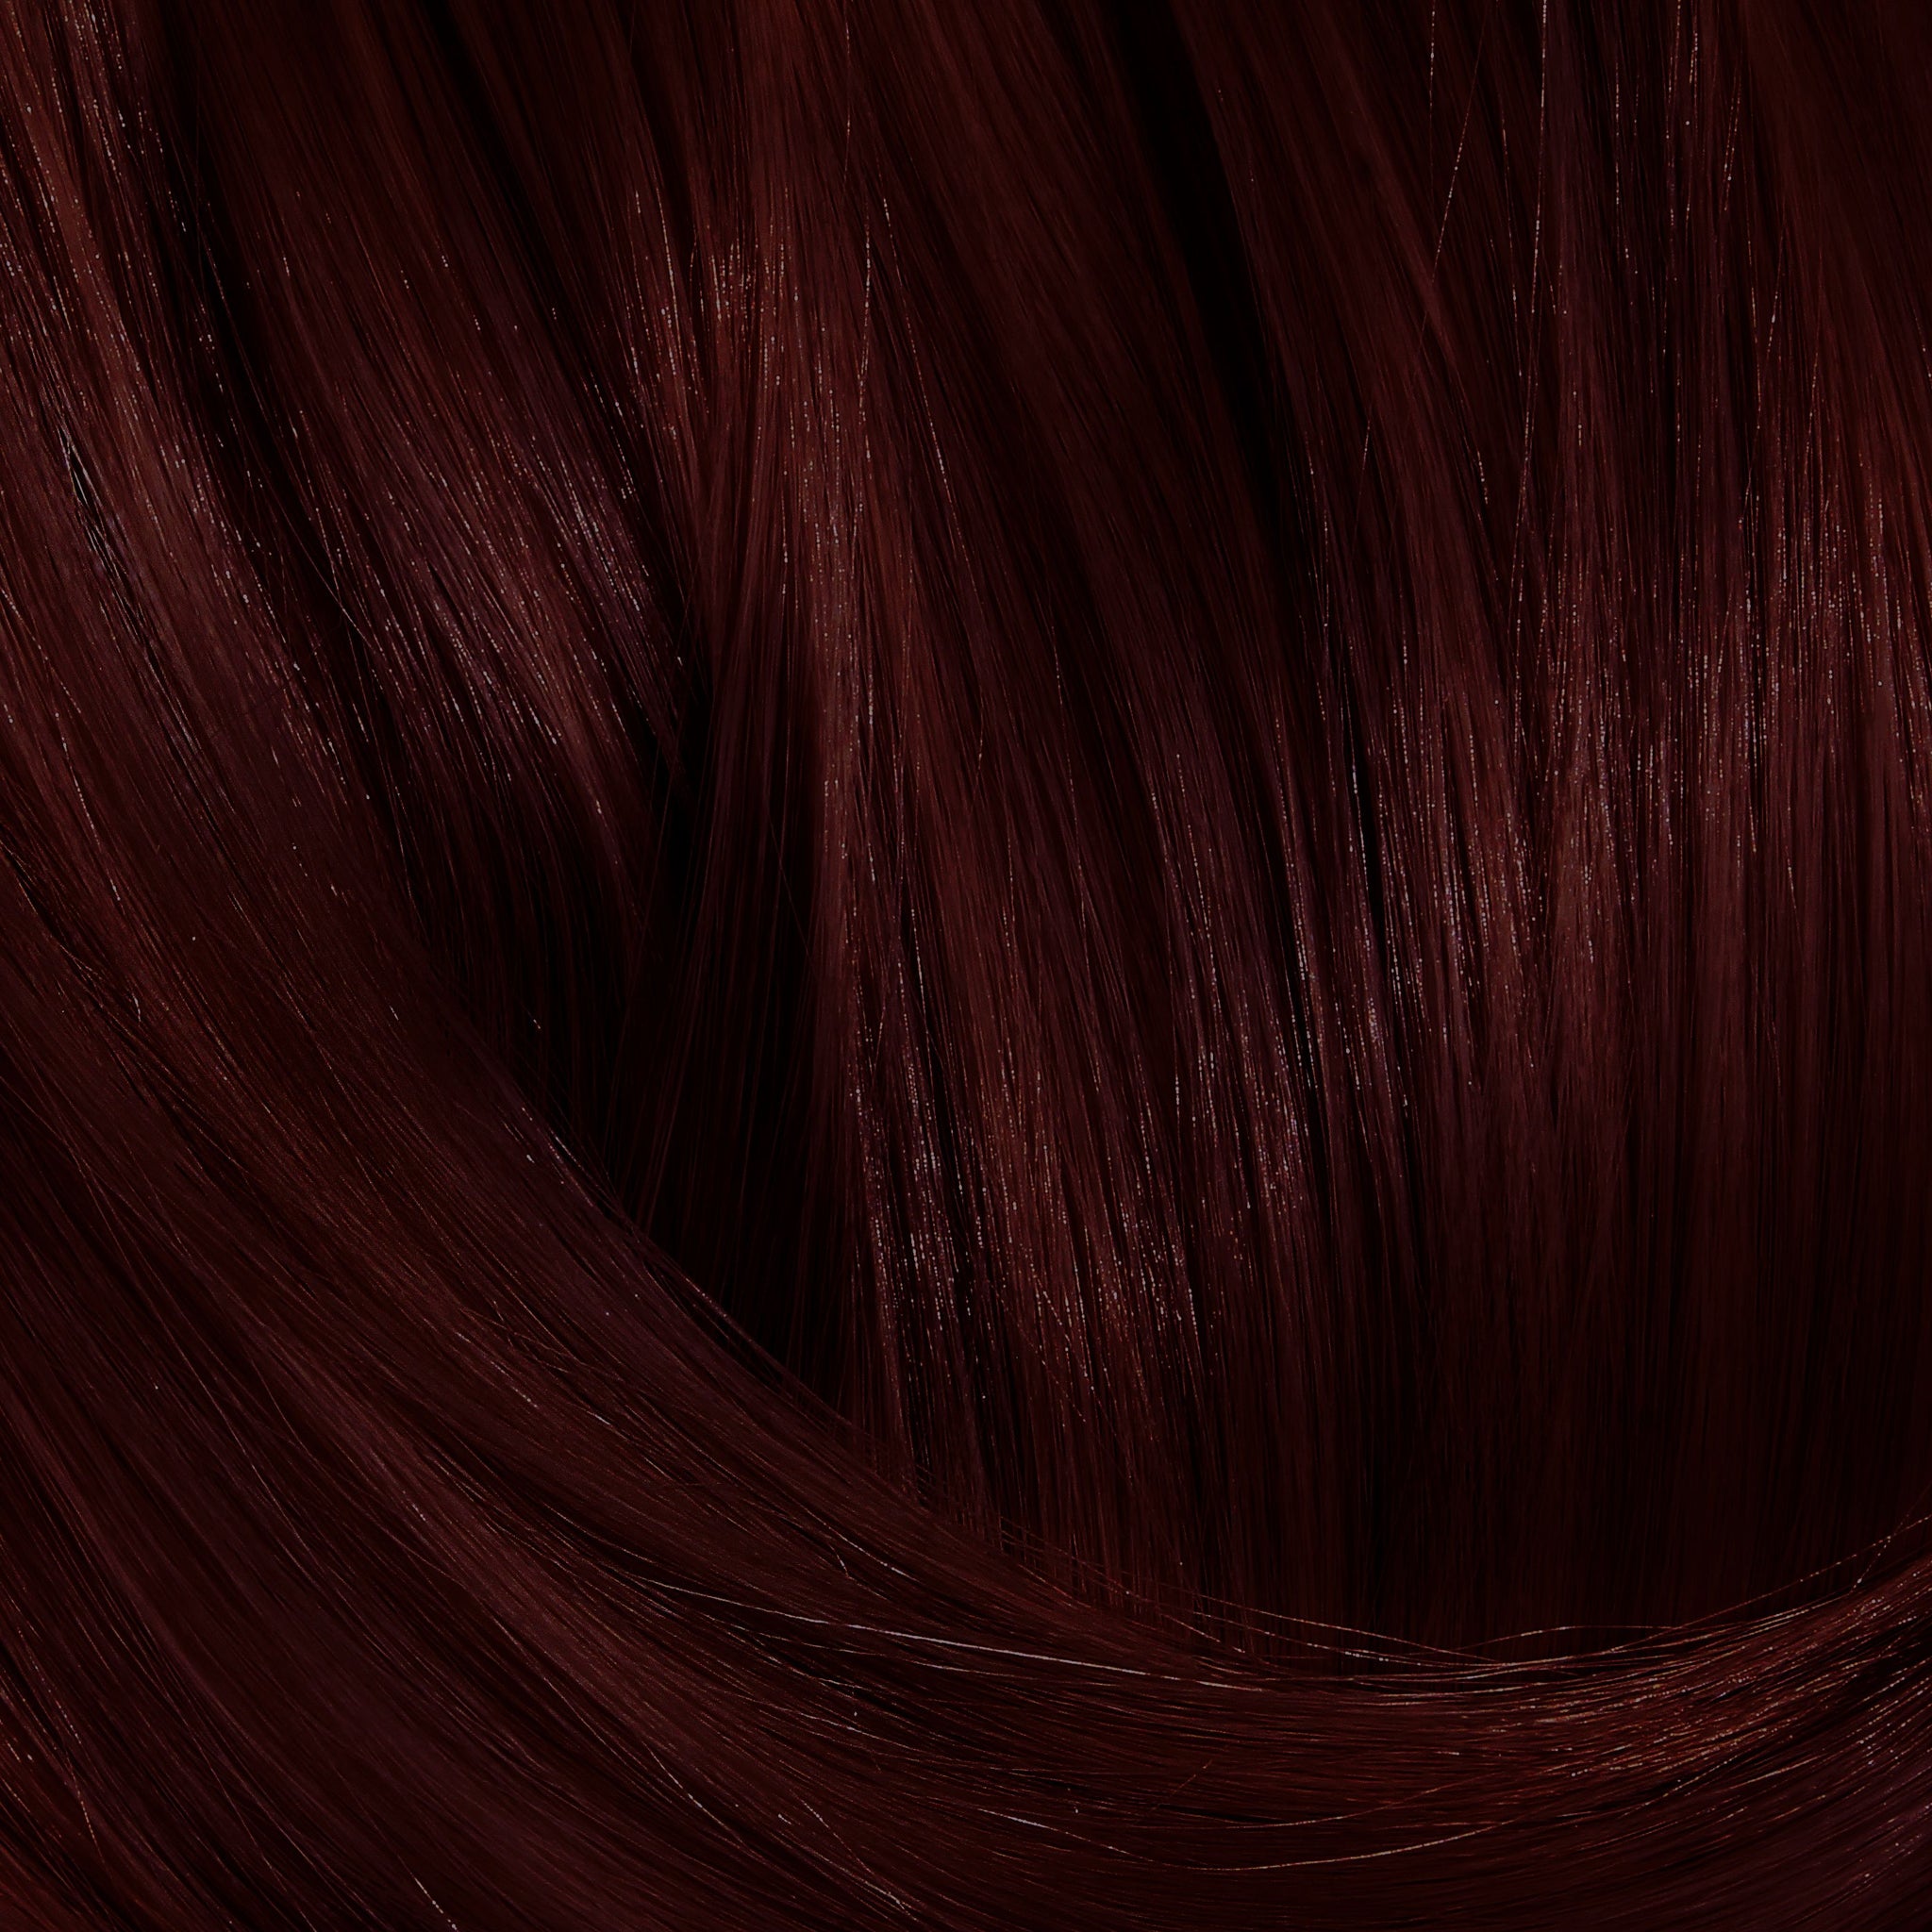 dark red plum hair color